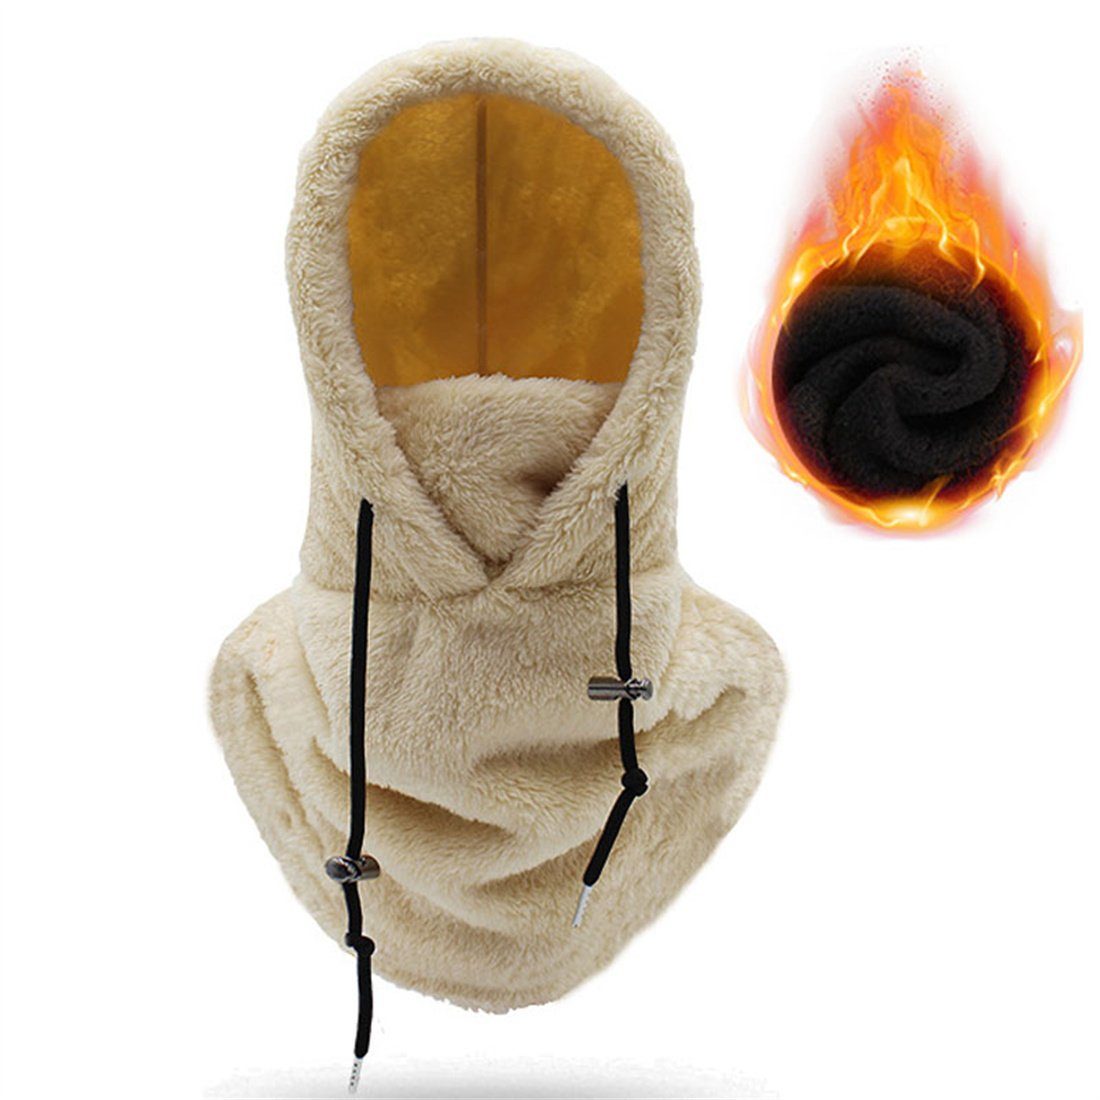 DÖRÖY Sturmhaube Winter Reiten Windproof Maske,Multifunktionale Warme Ski Kopfbedeckung khaki